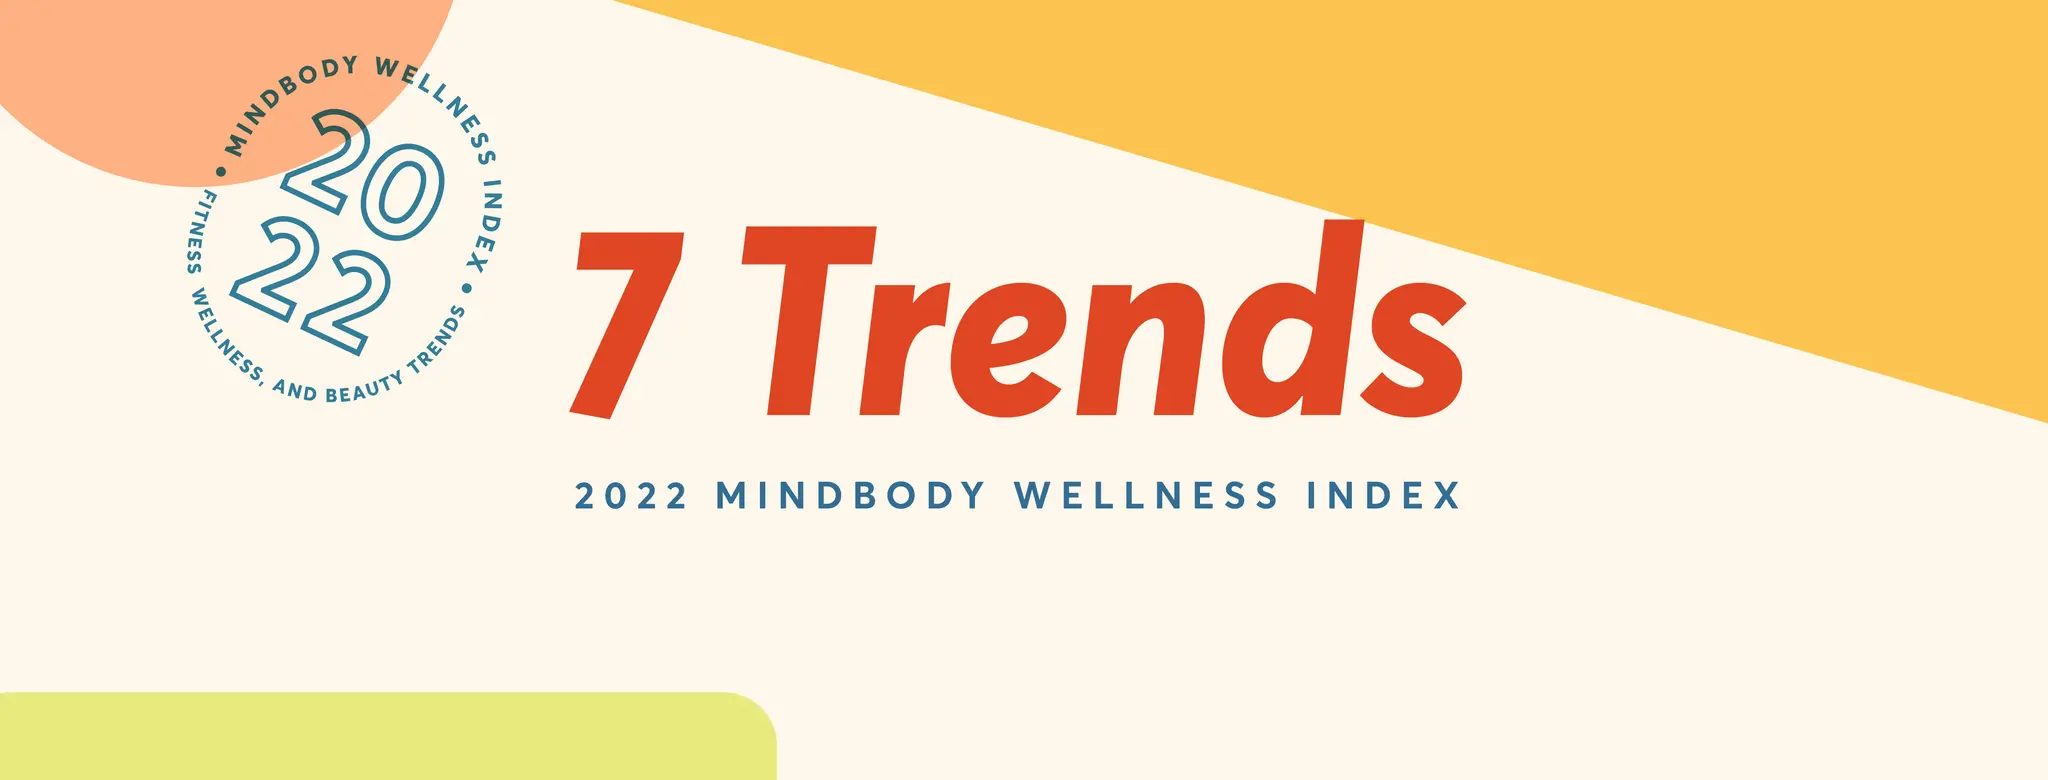 7 trends 2022 mindbody wellness index